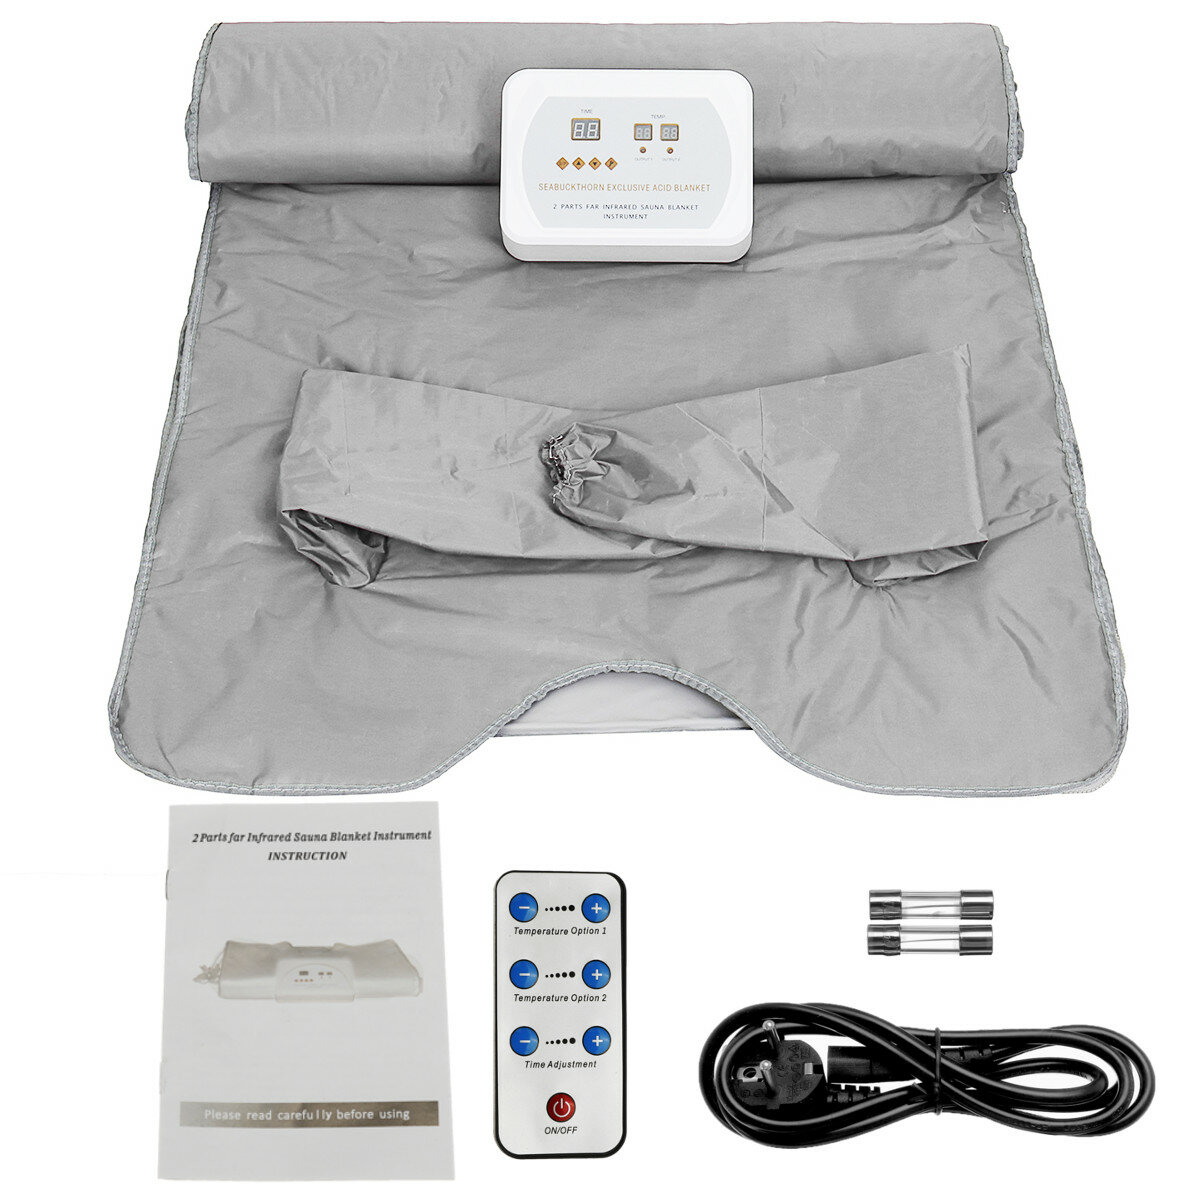 

Space Blanket Far Infrared Sauna Blanket Detox Slimming Suit Home Spa Losing Weight Machine